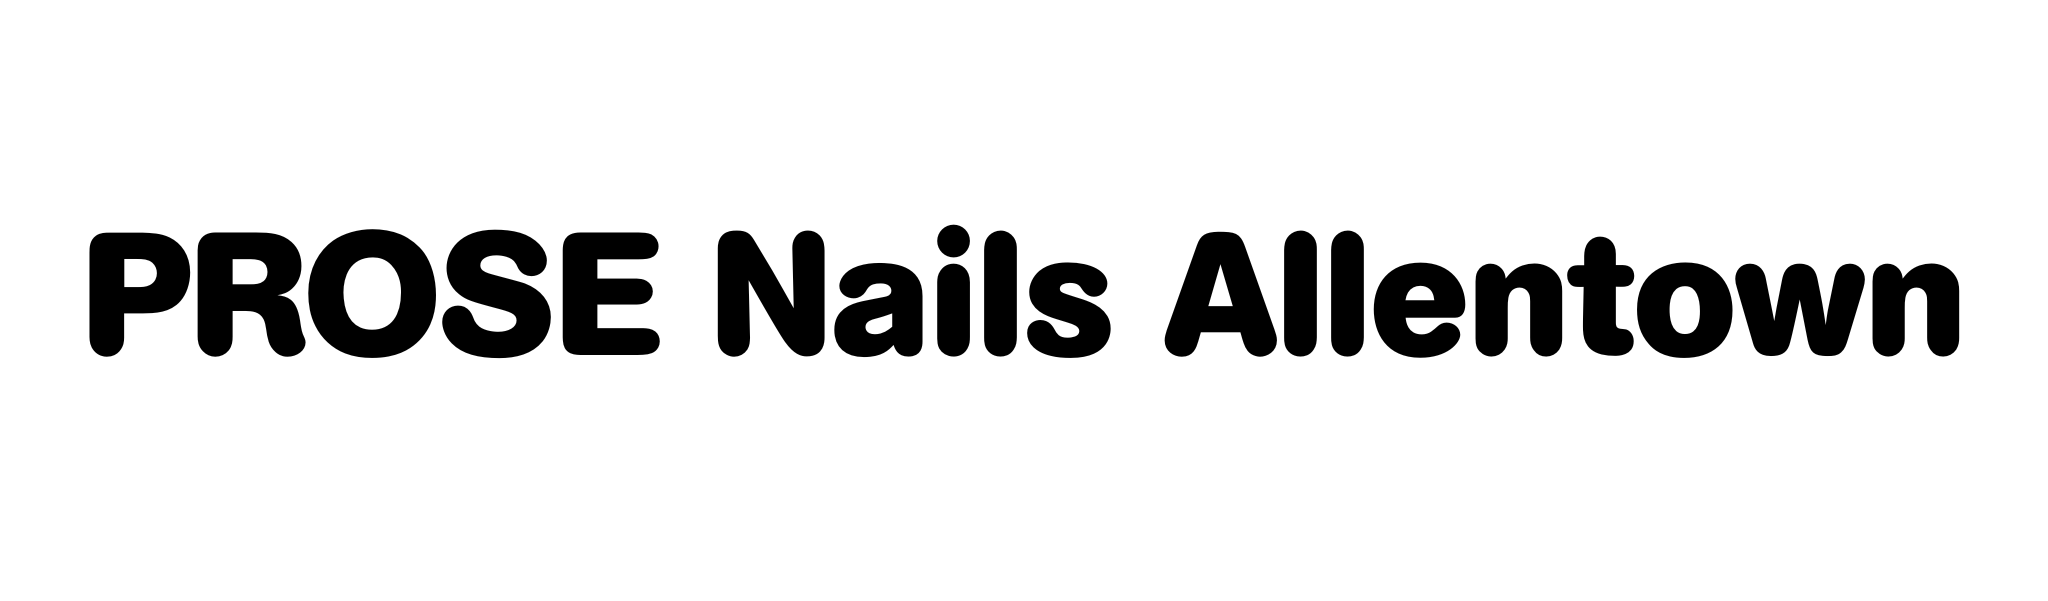 PROSE Nails Allentown (Silver)